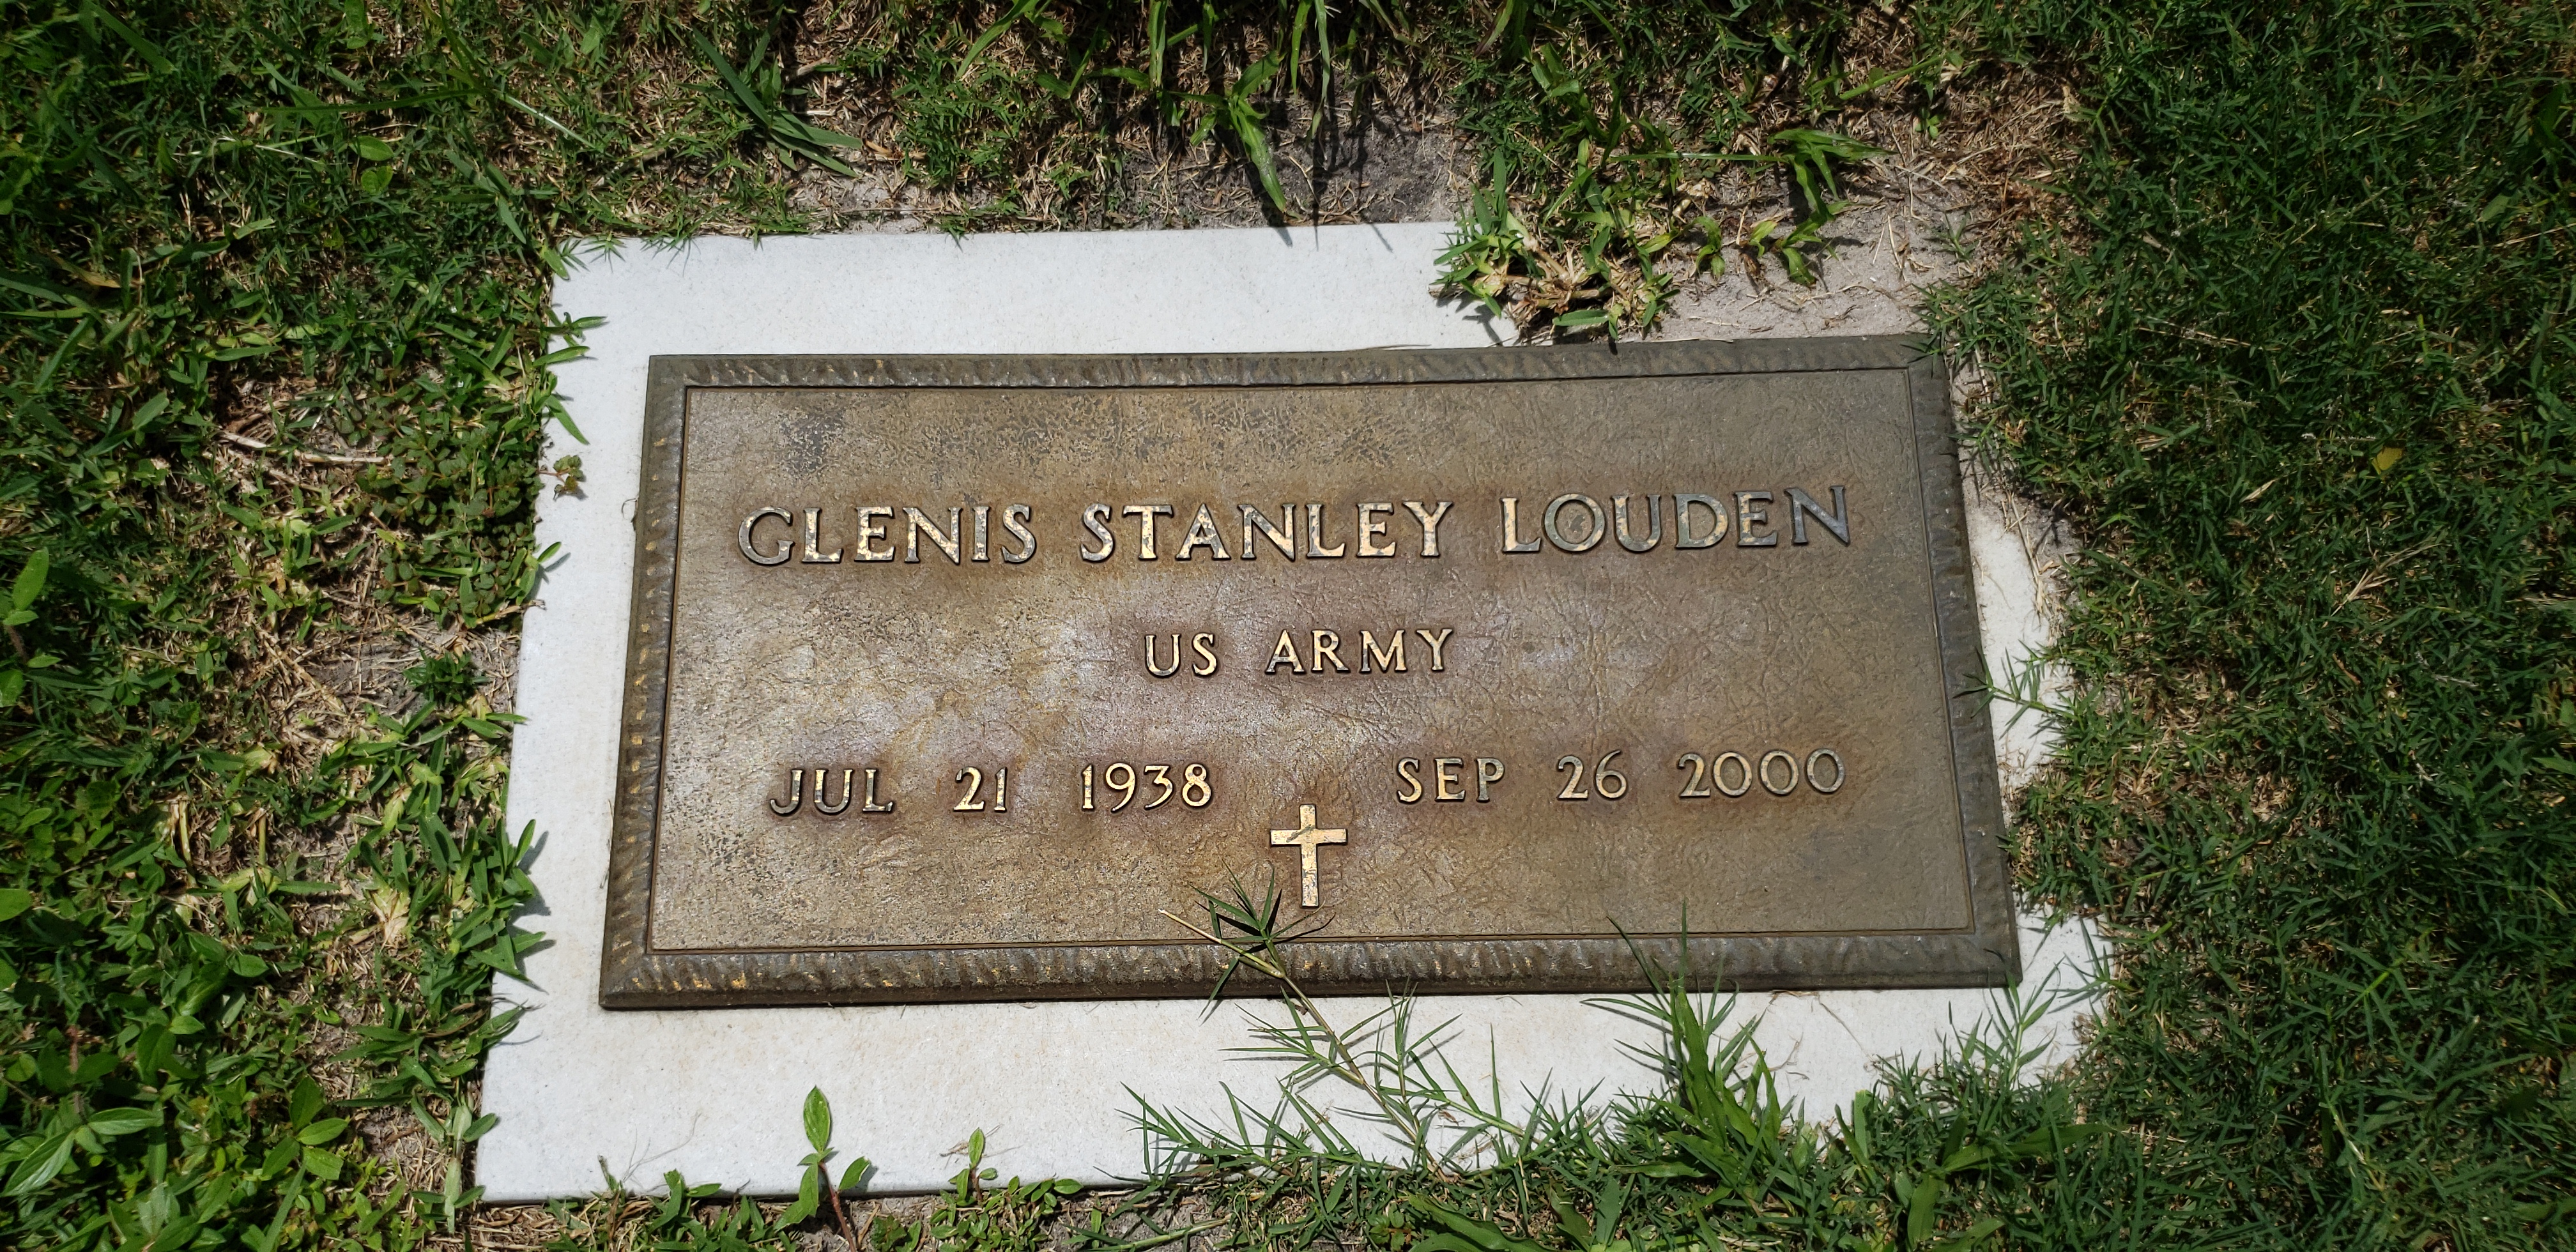 Glenis Stanley Louden